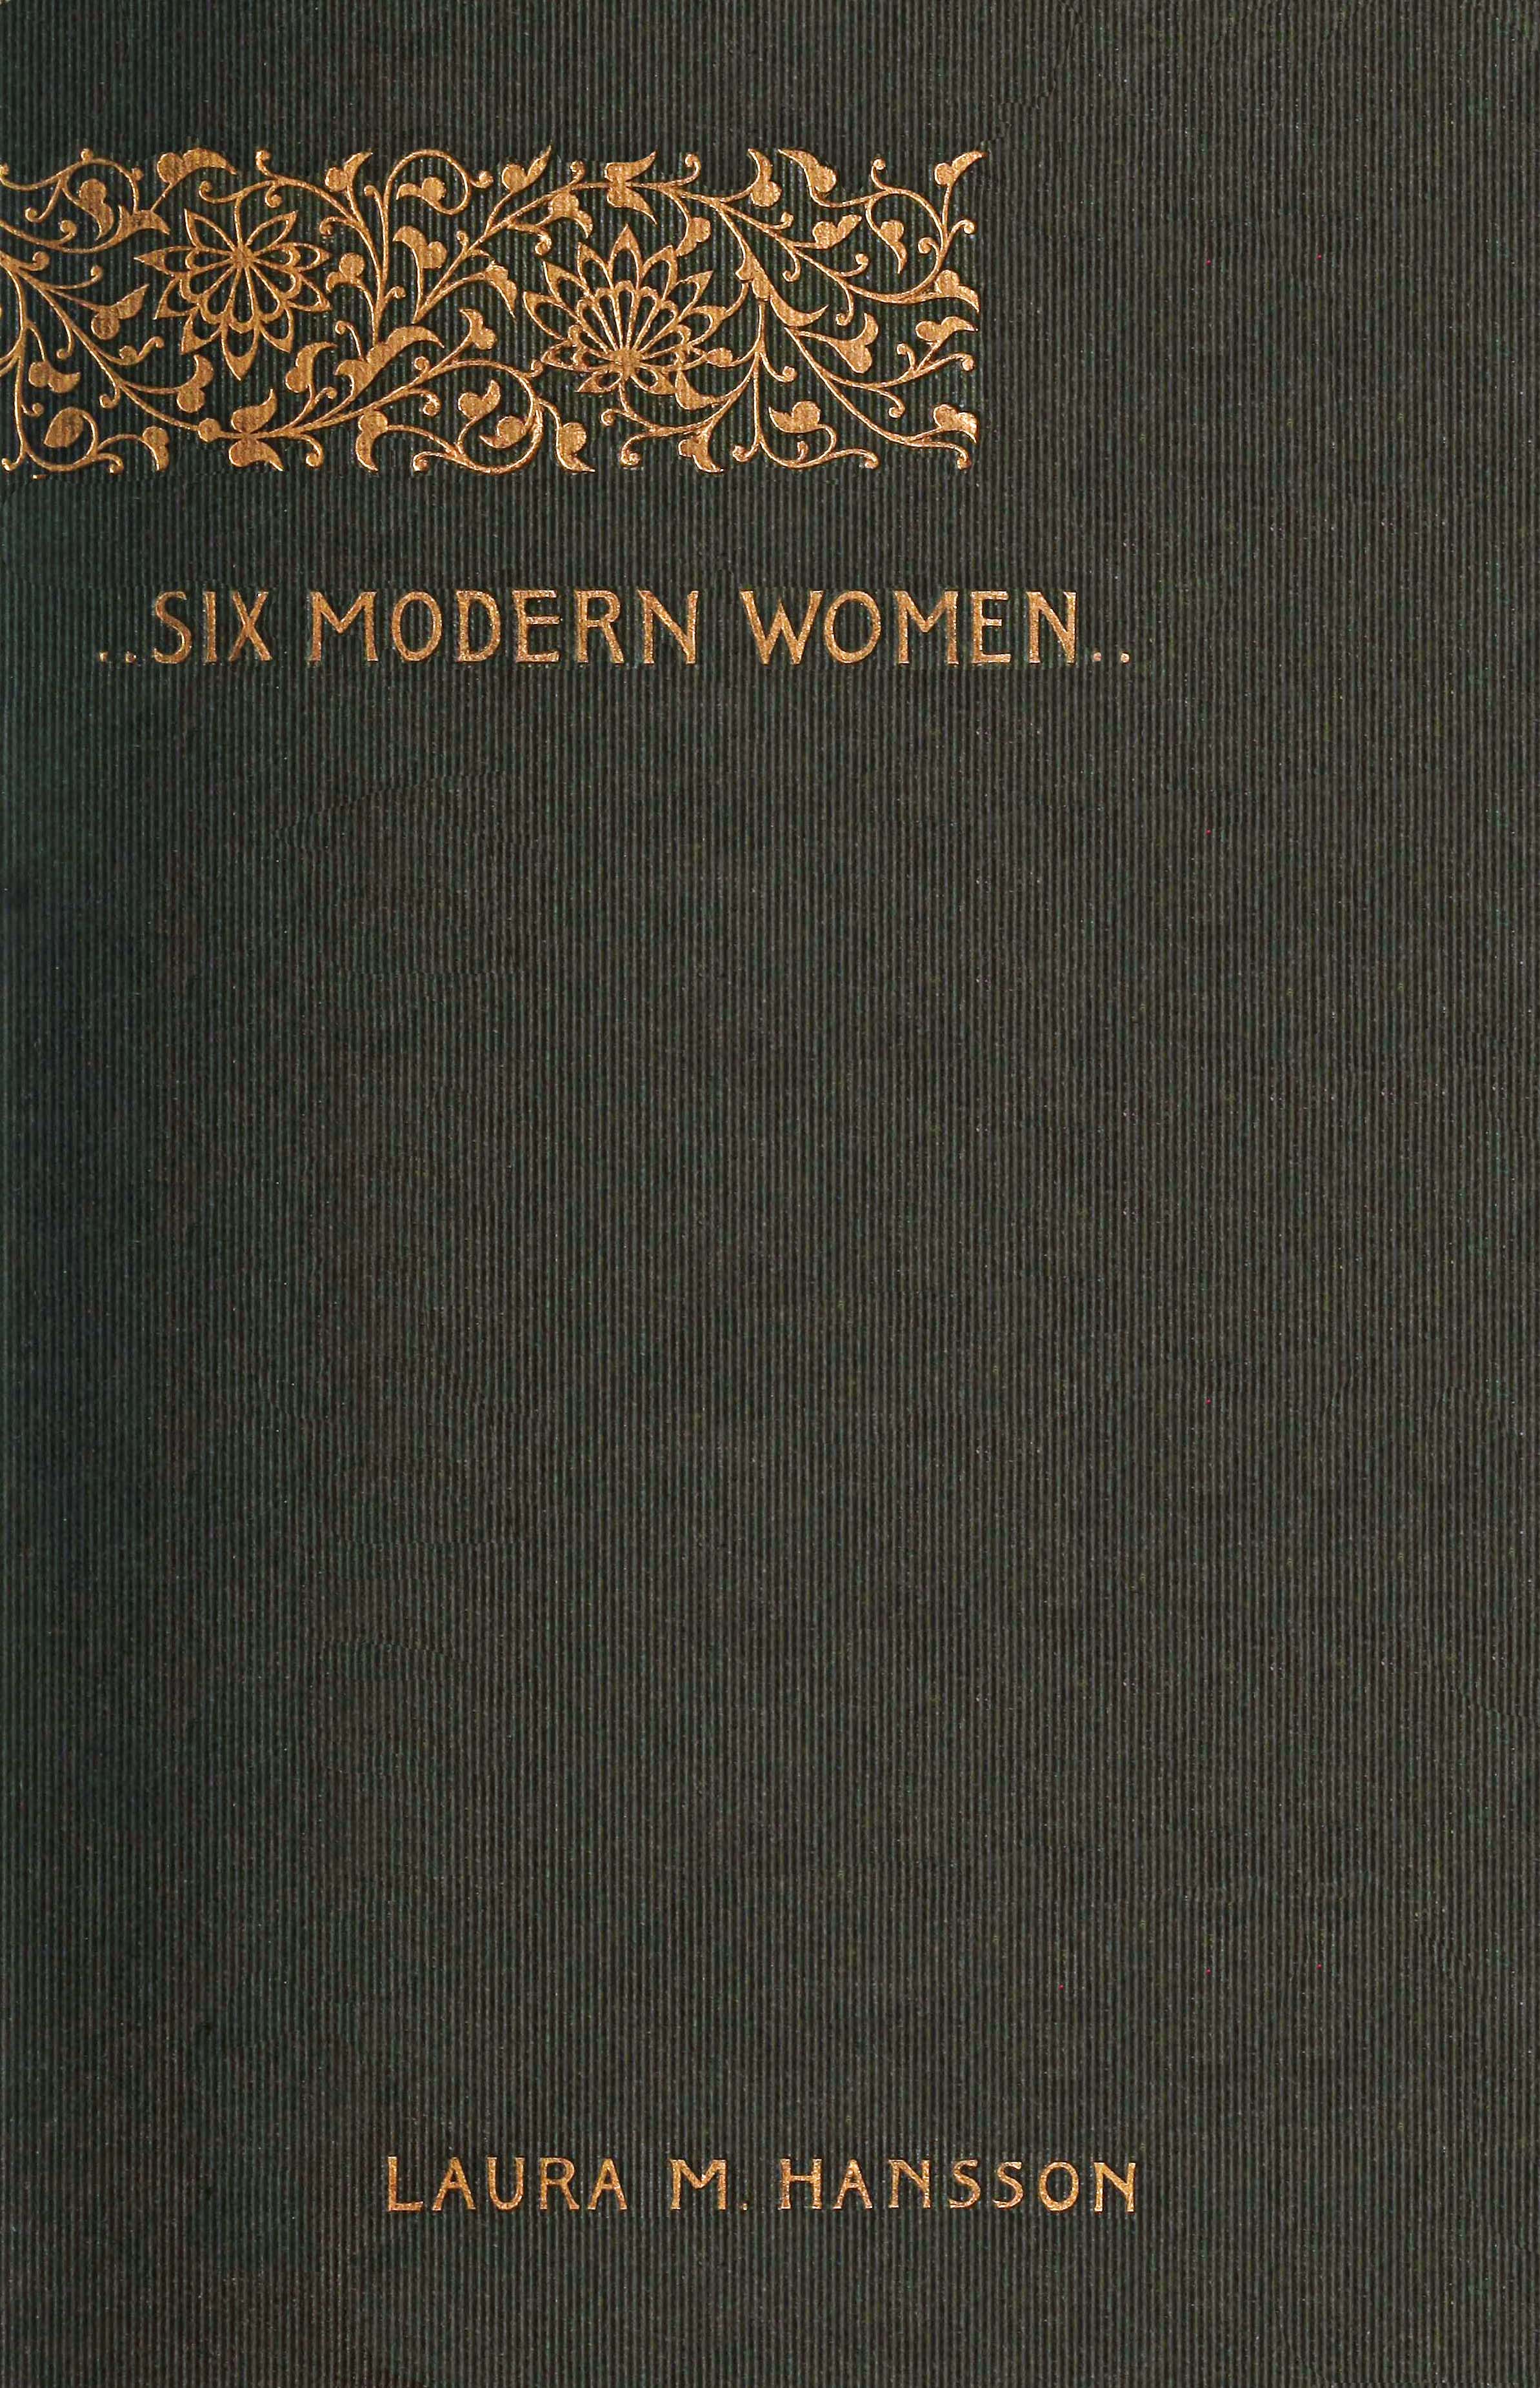 Six modern women, by Laura Marholm Hansson—A Project Gutenberg eBook